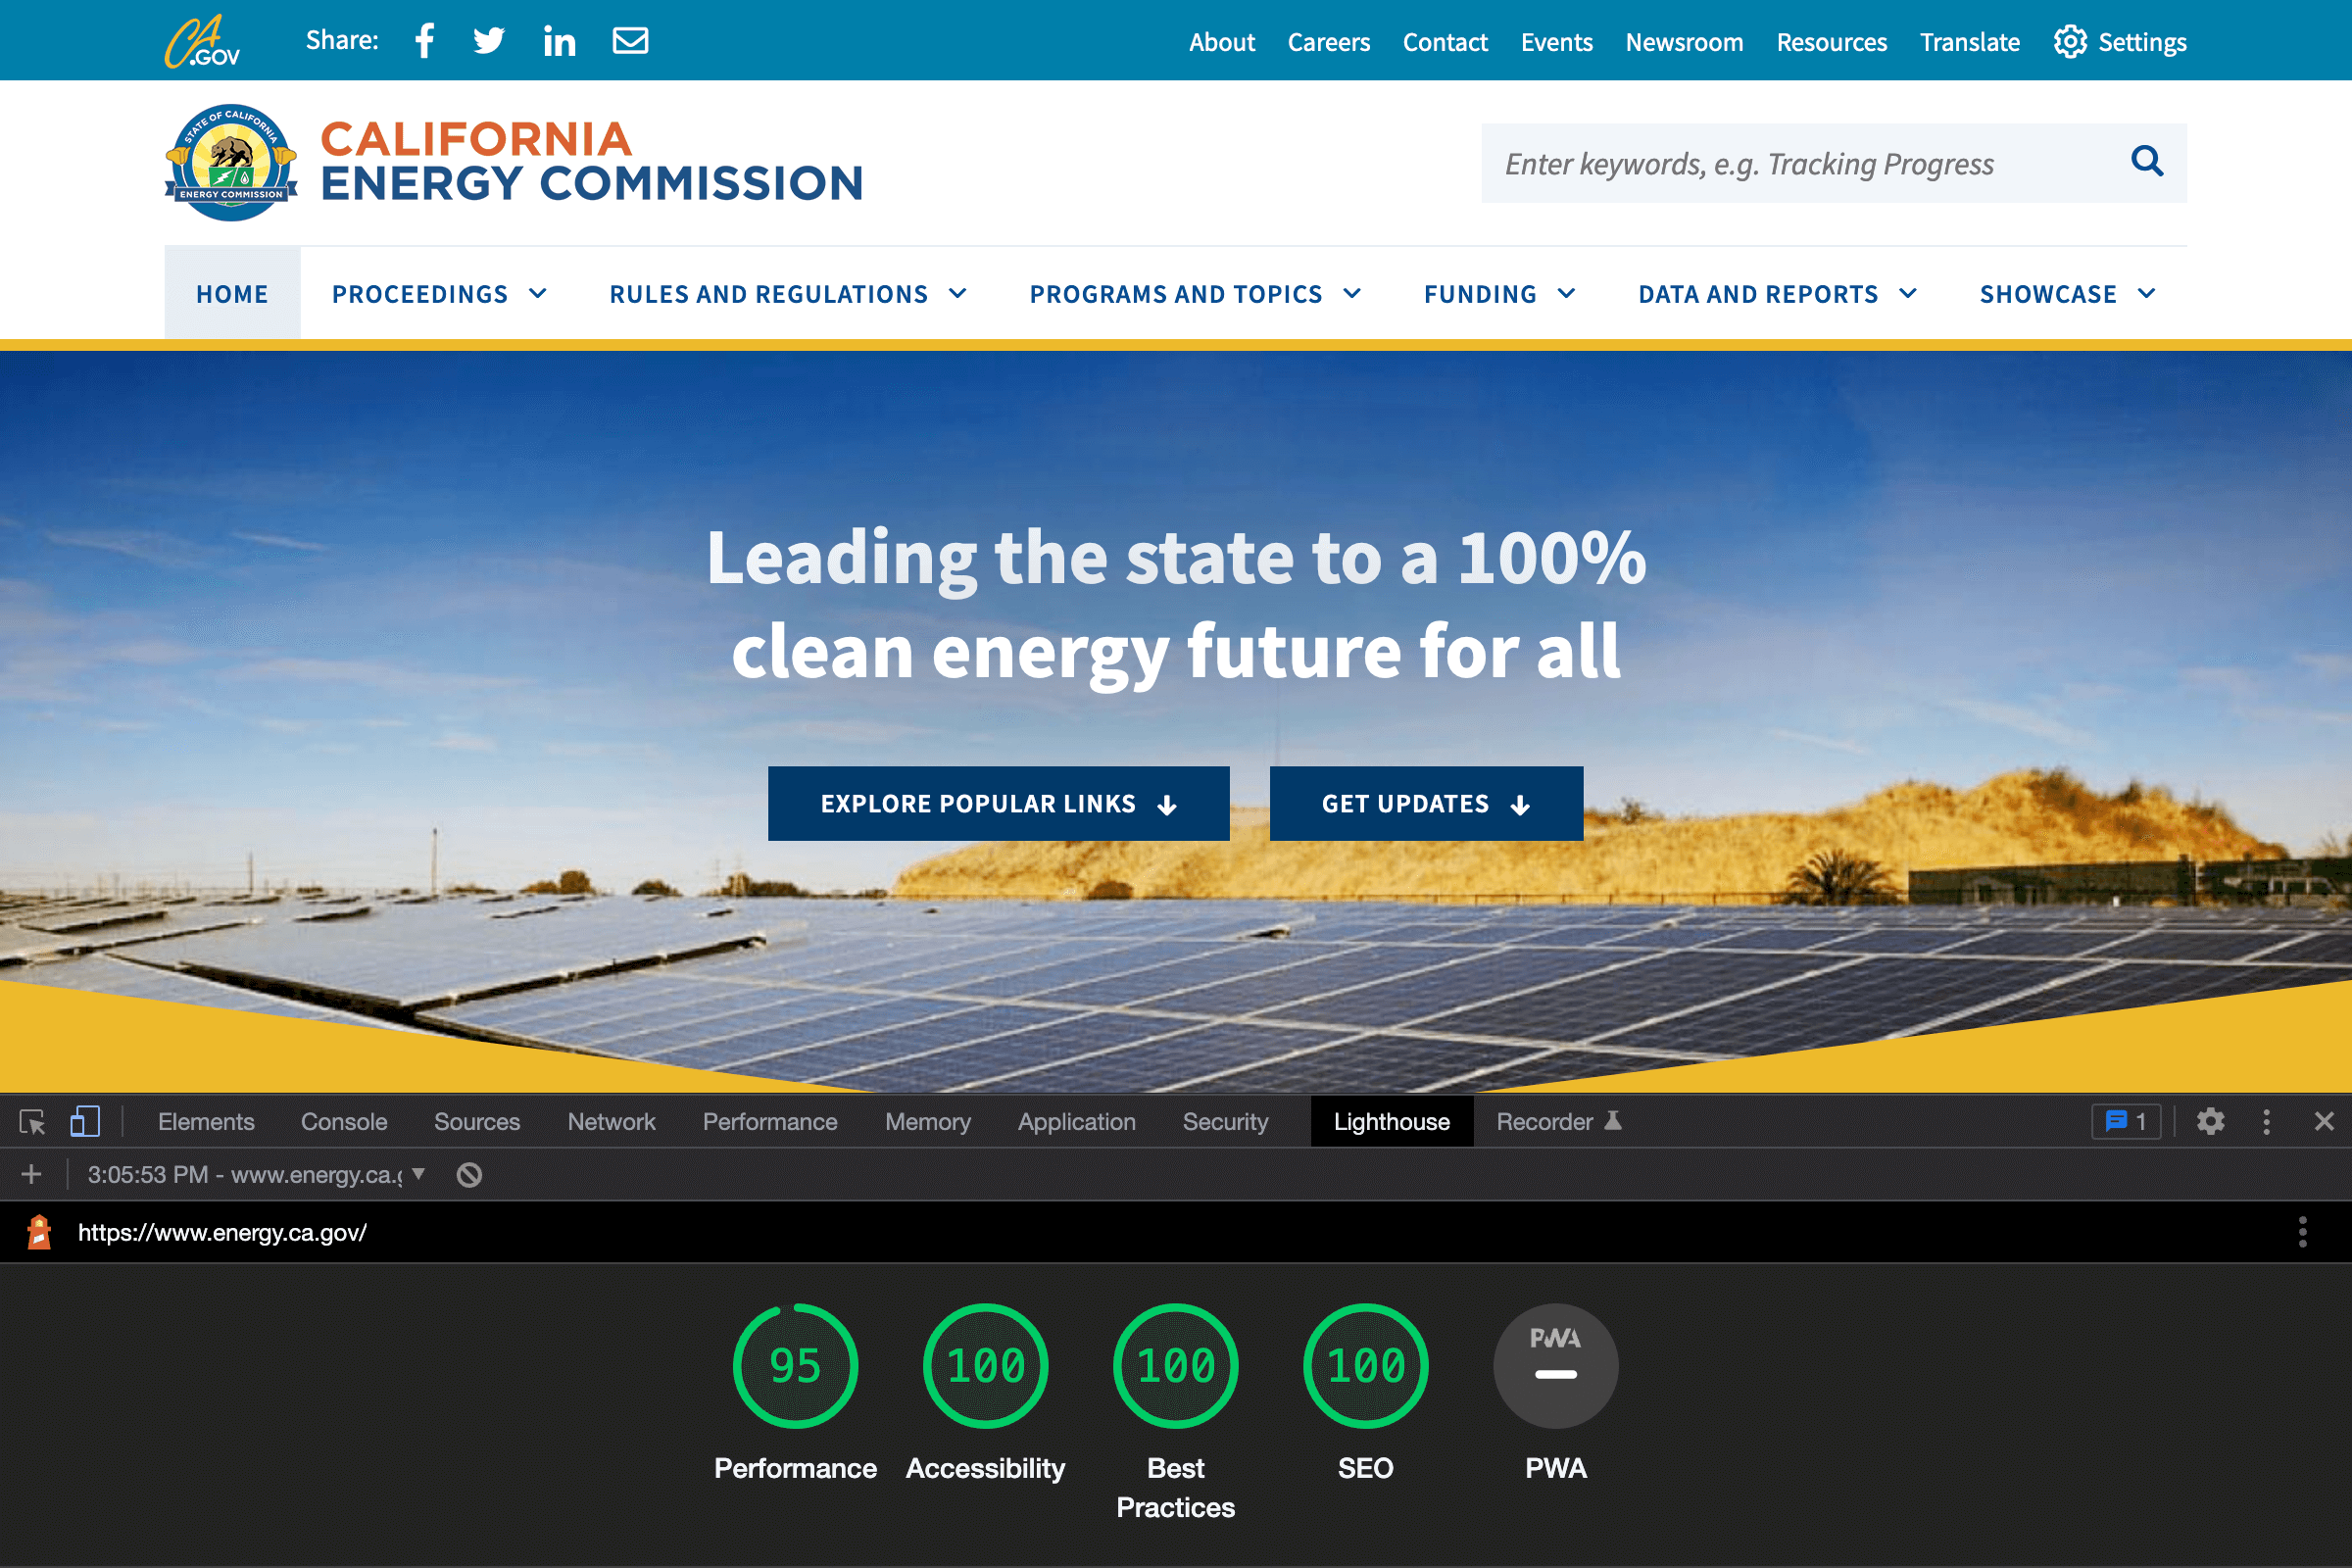 California Energy Commission Google Lighthouse scores: 95, 100, 100, 100.